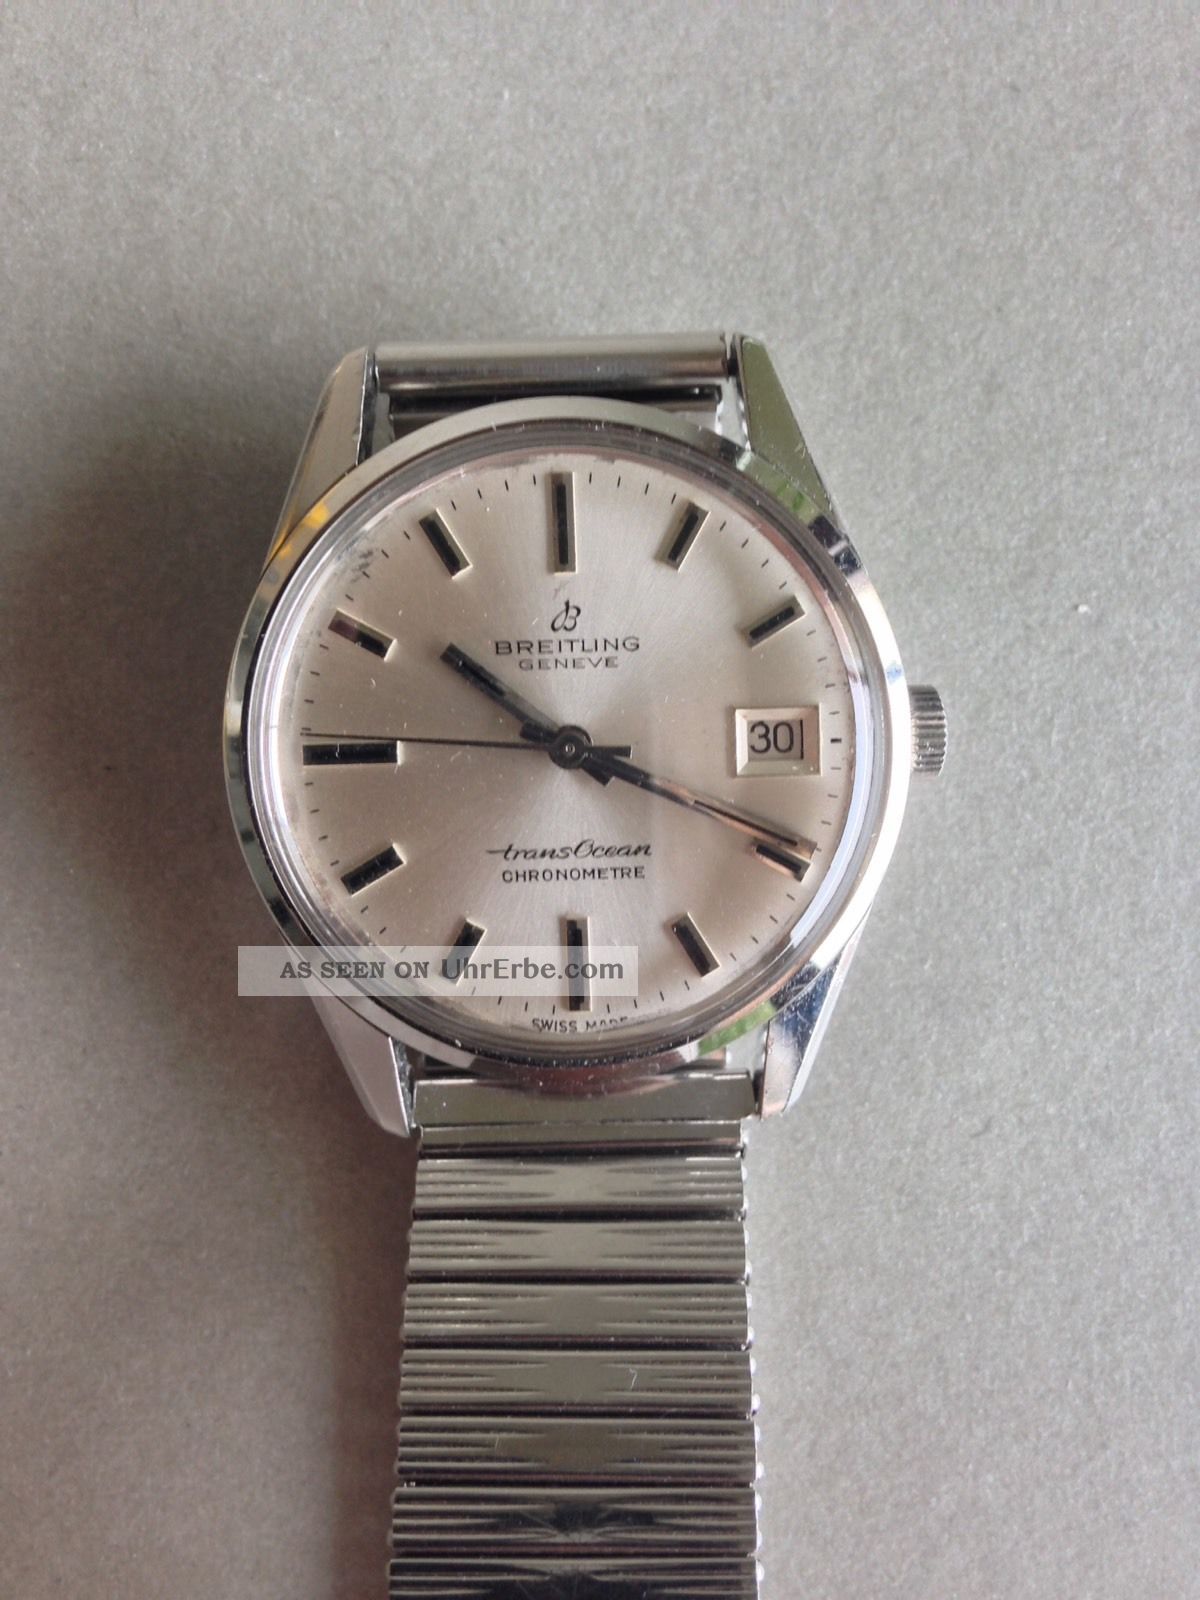 Breitling Transocean Chronometre Armbanduhren Bild